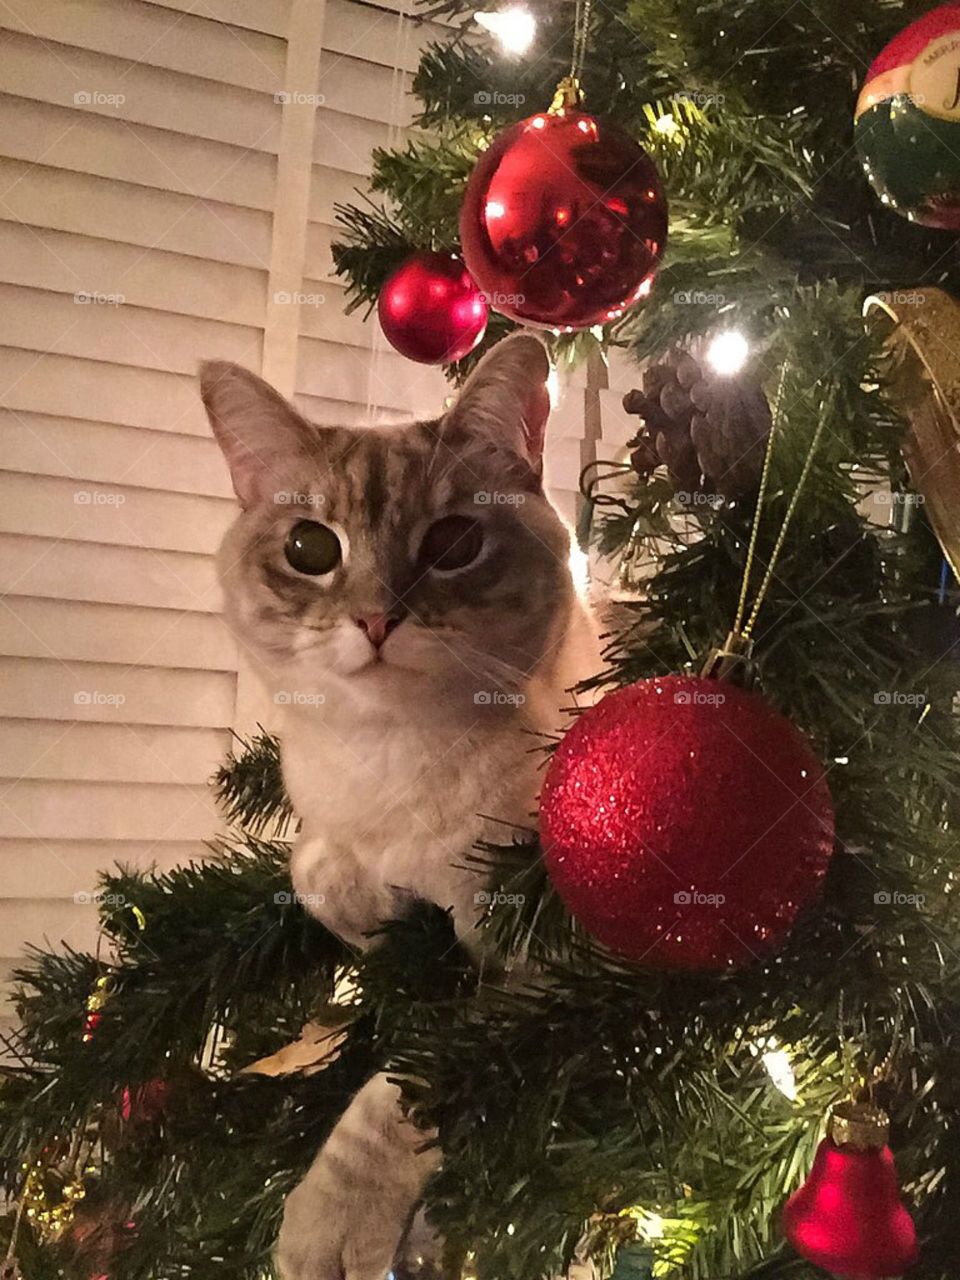 Cat In the tree